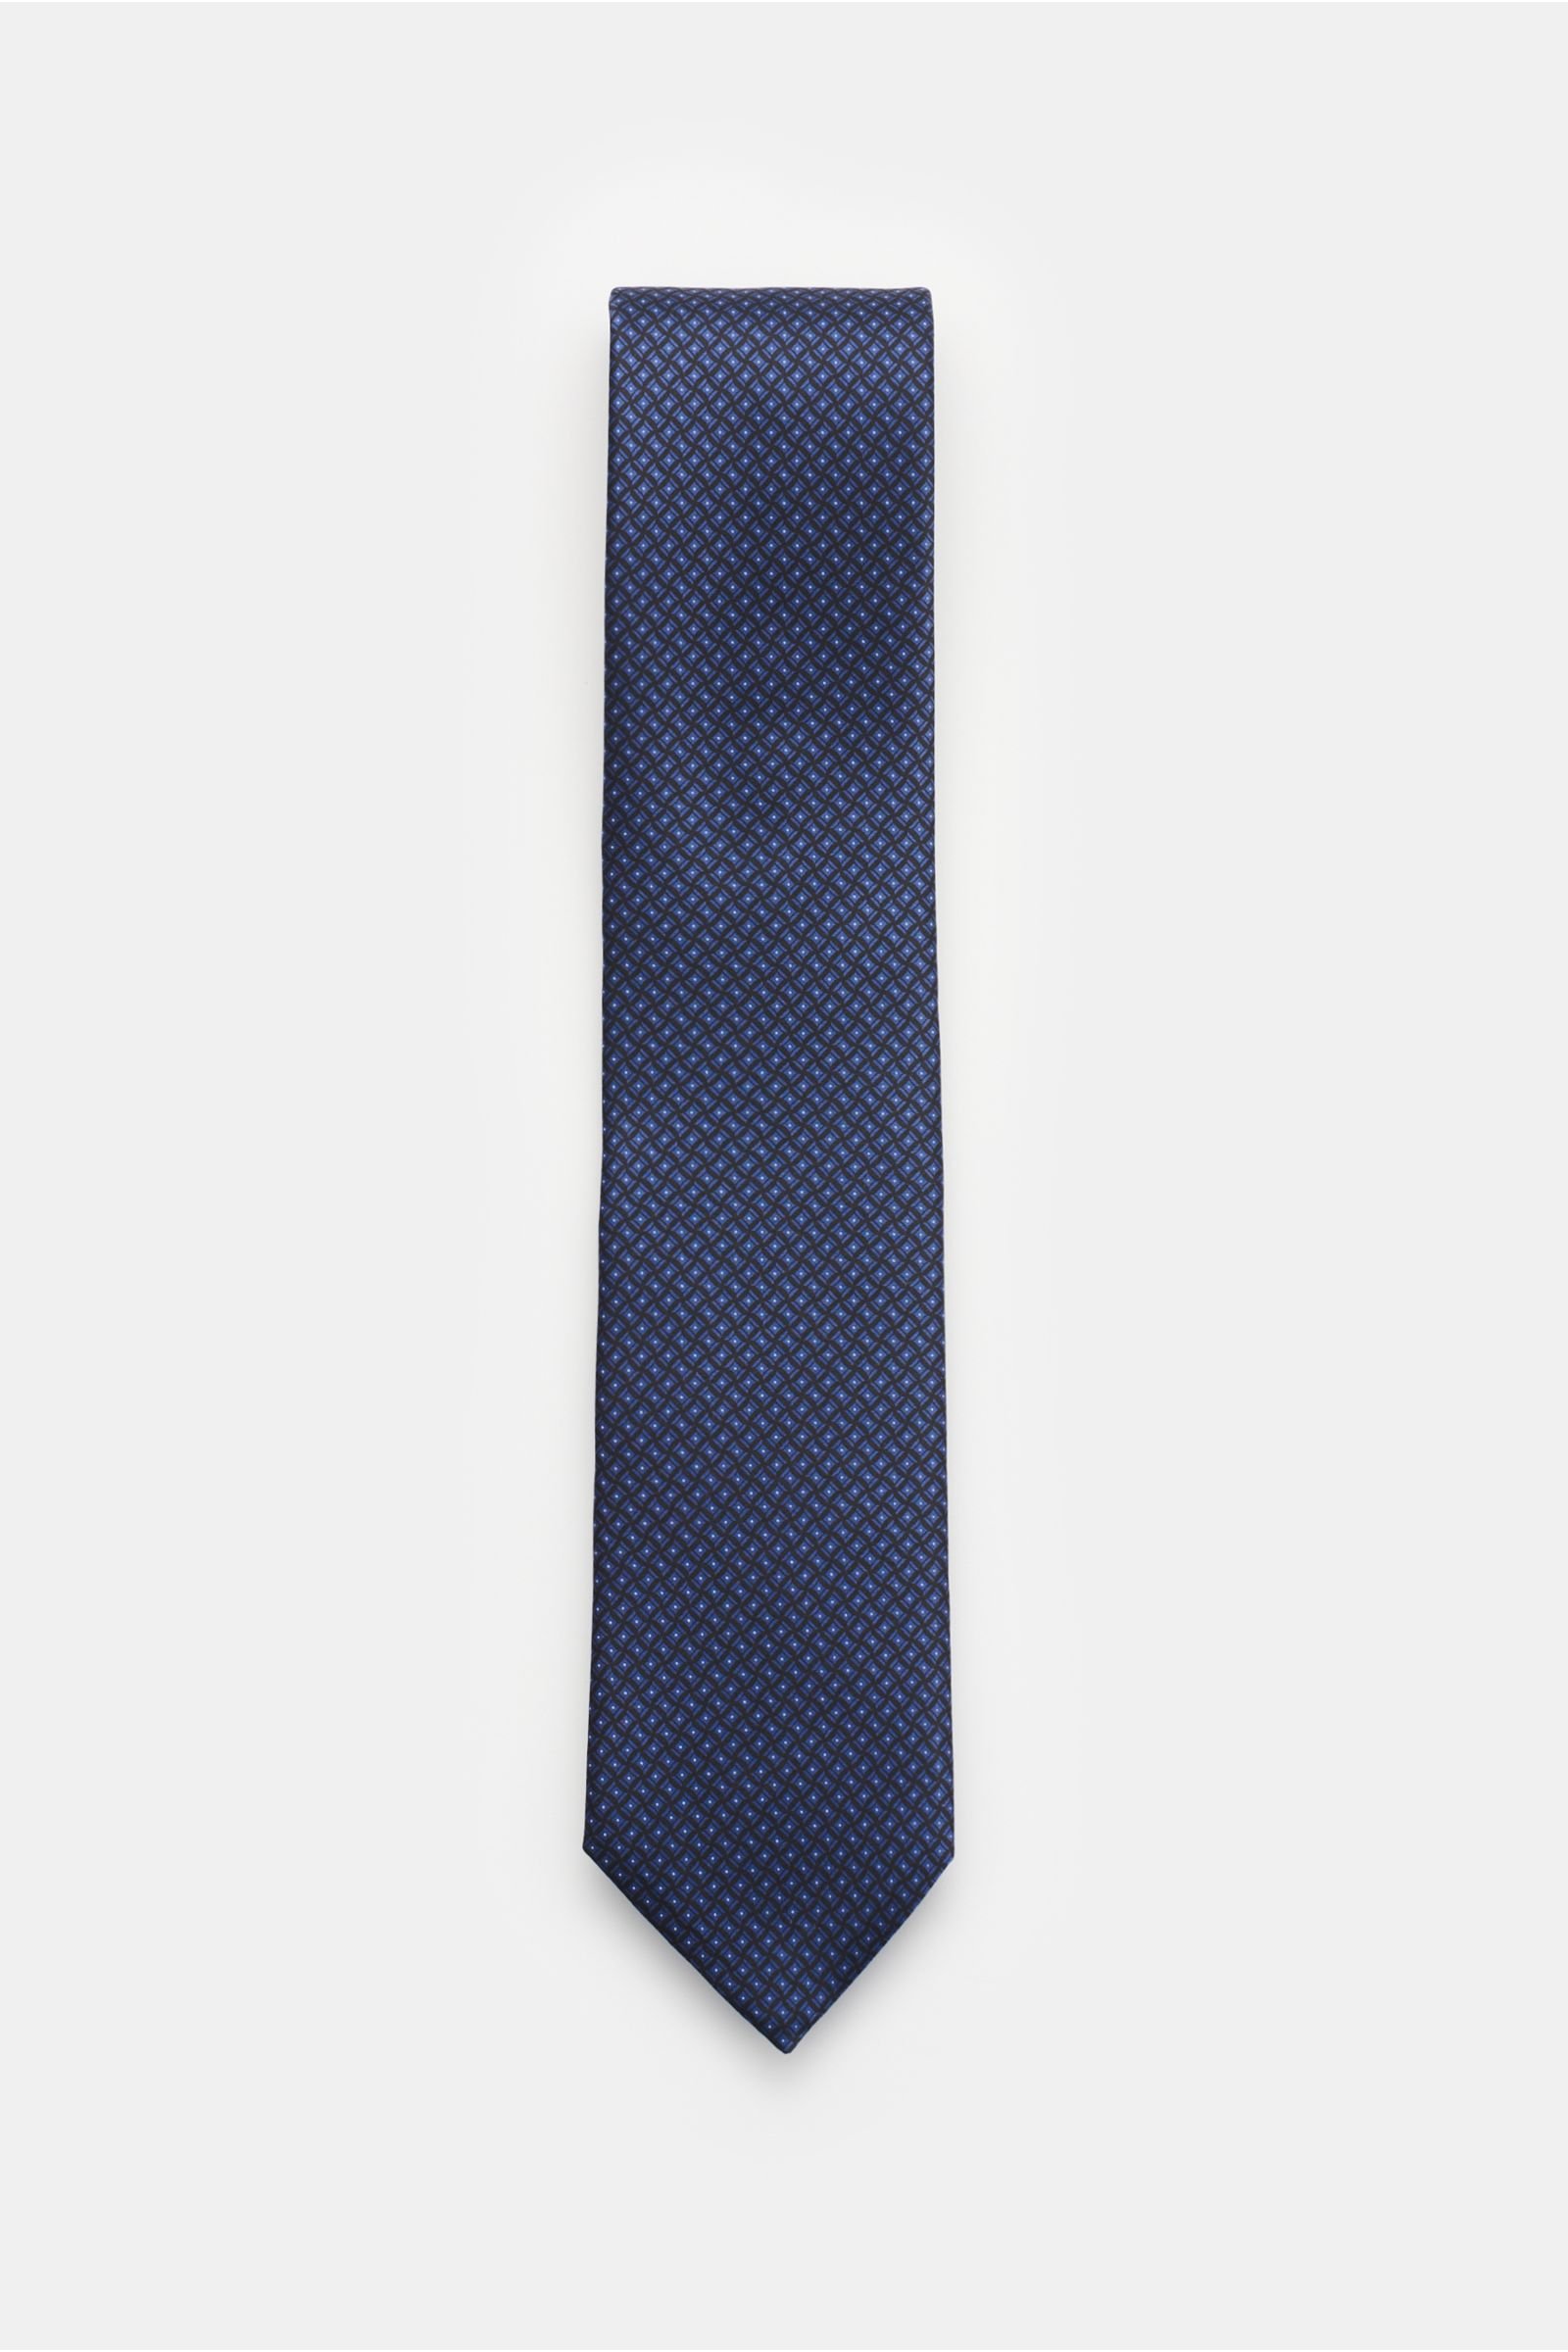 Silk tie navy patterned